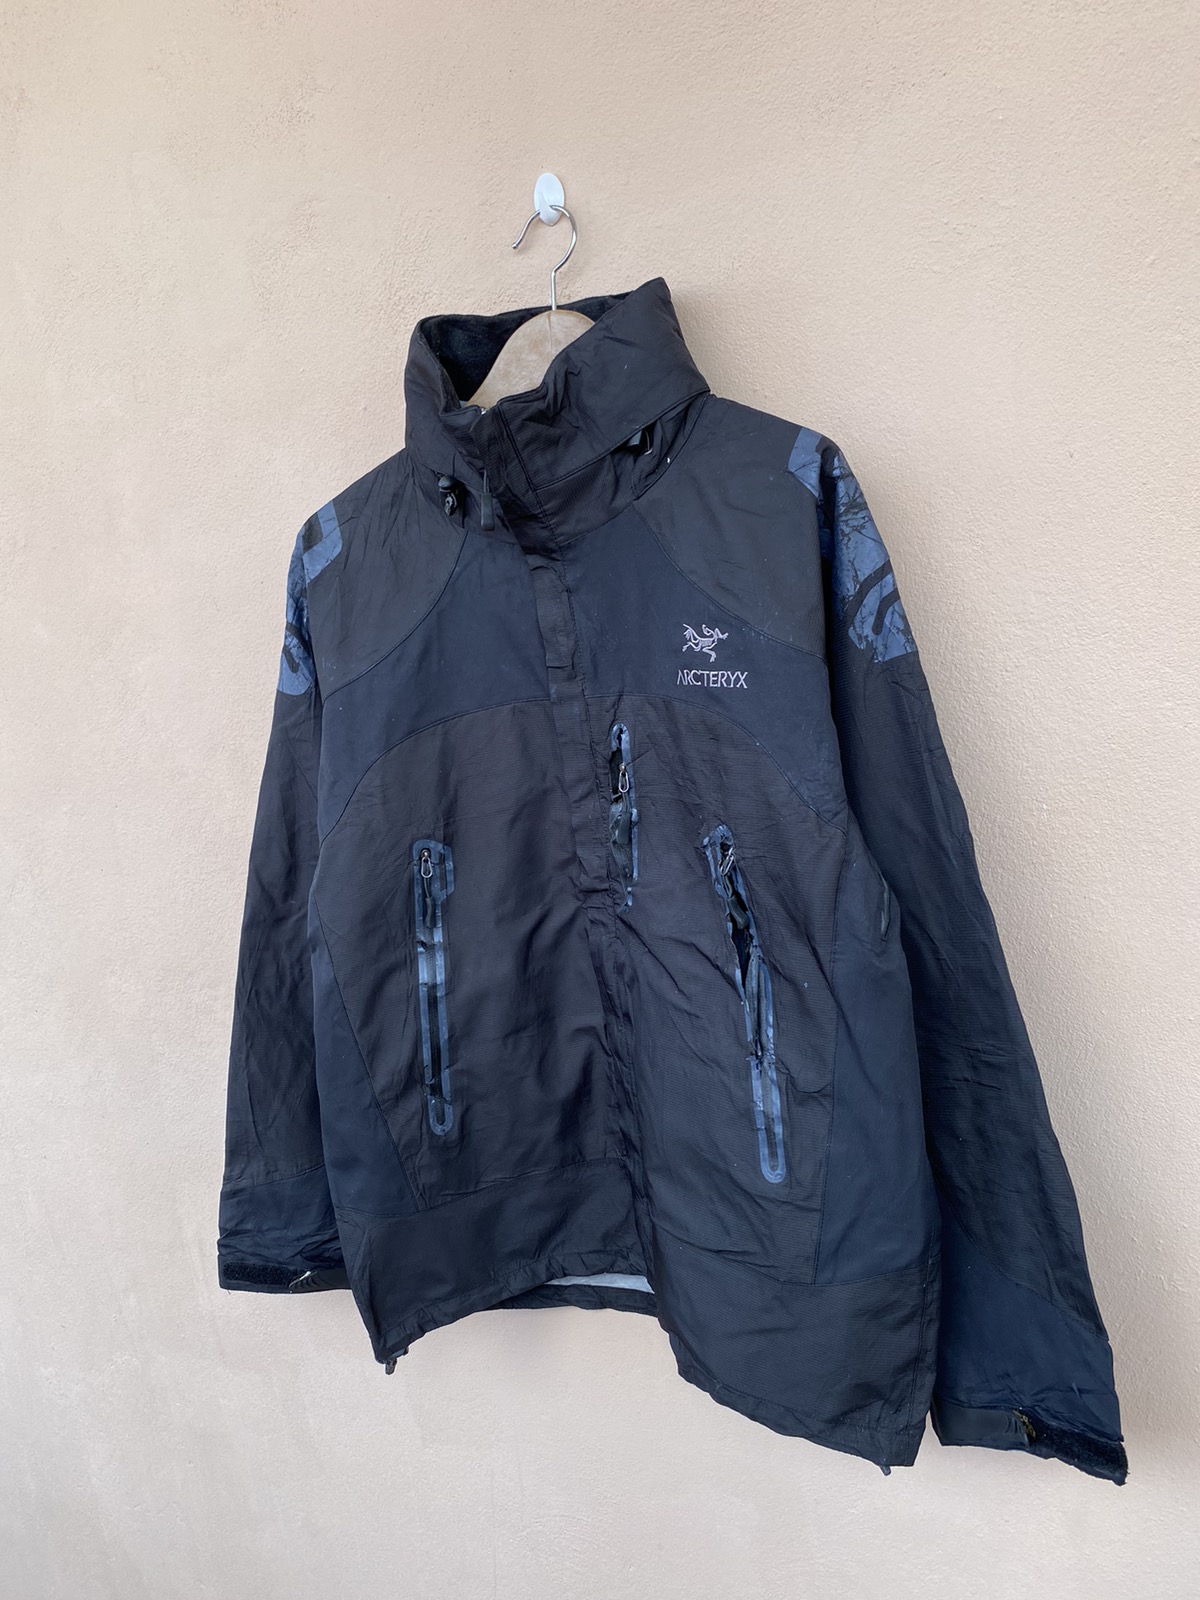 Arcteryx Waterproof Jacket - 2